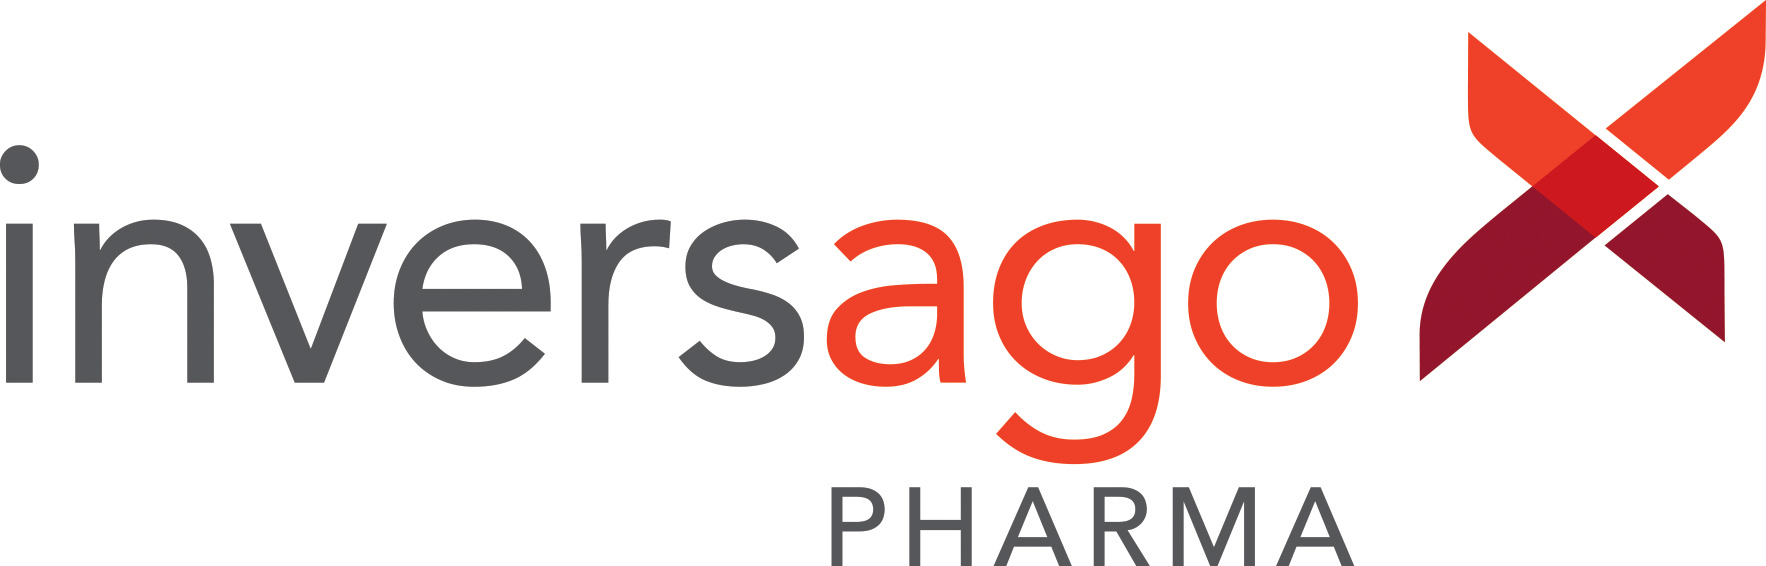 Inversago Pharma